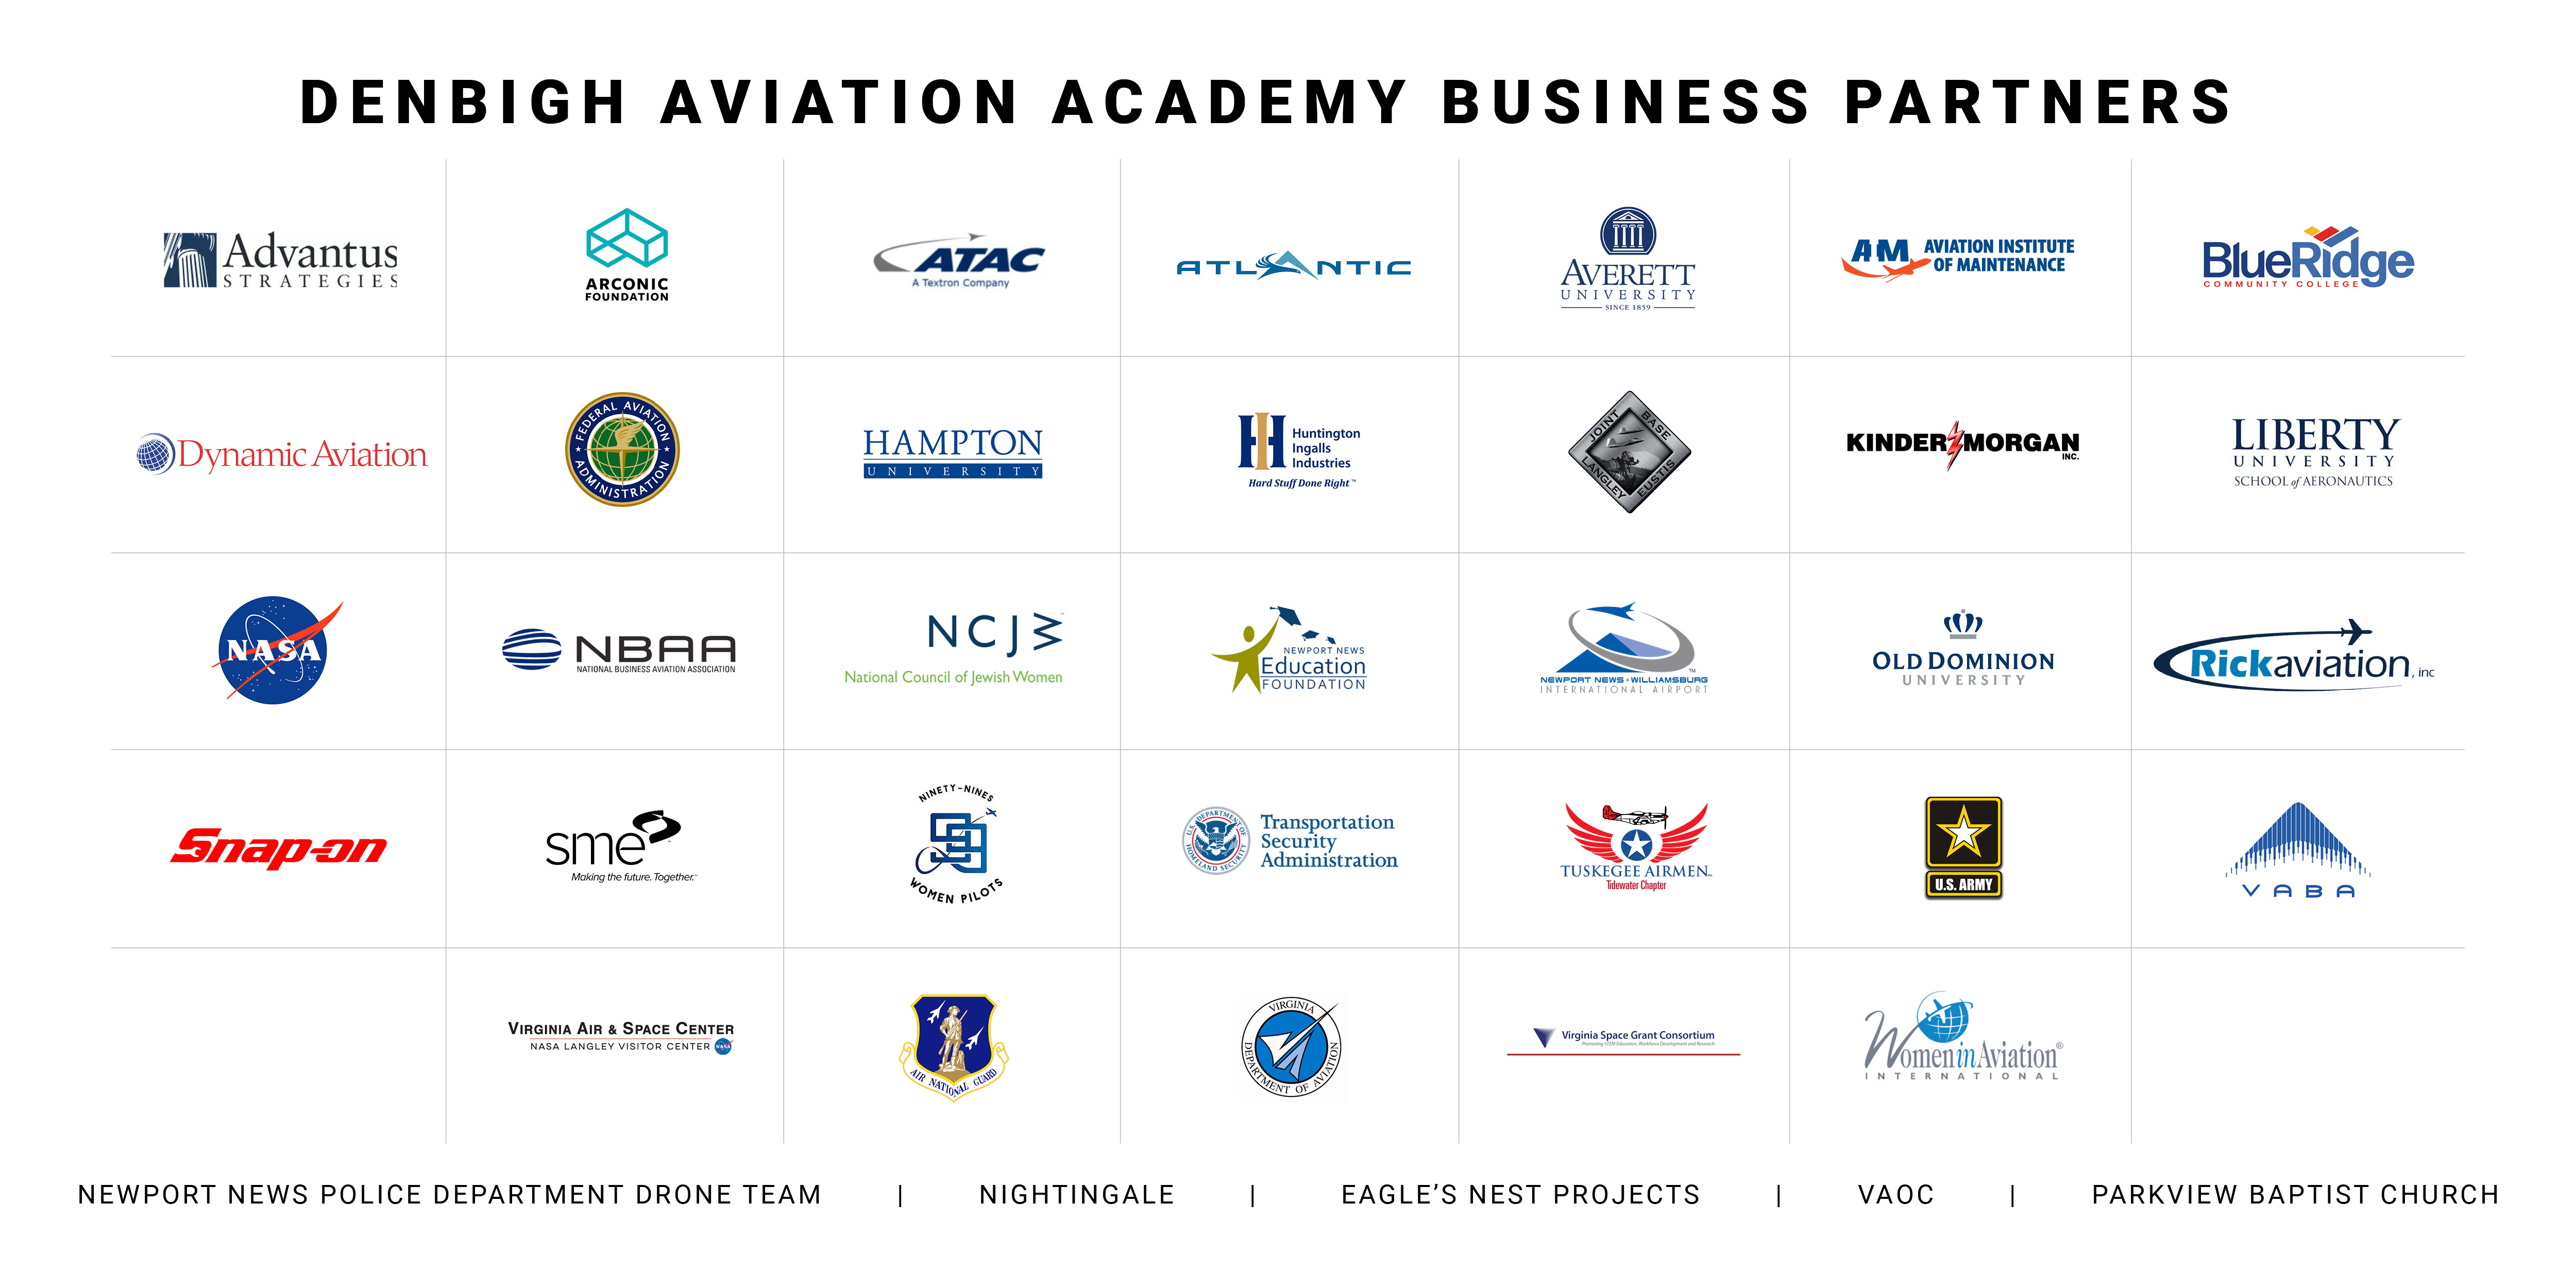 Denbigh Aviation Academy Business Partners